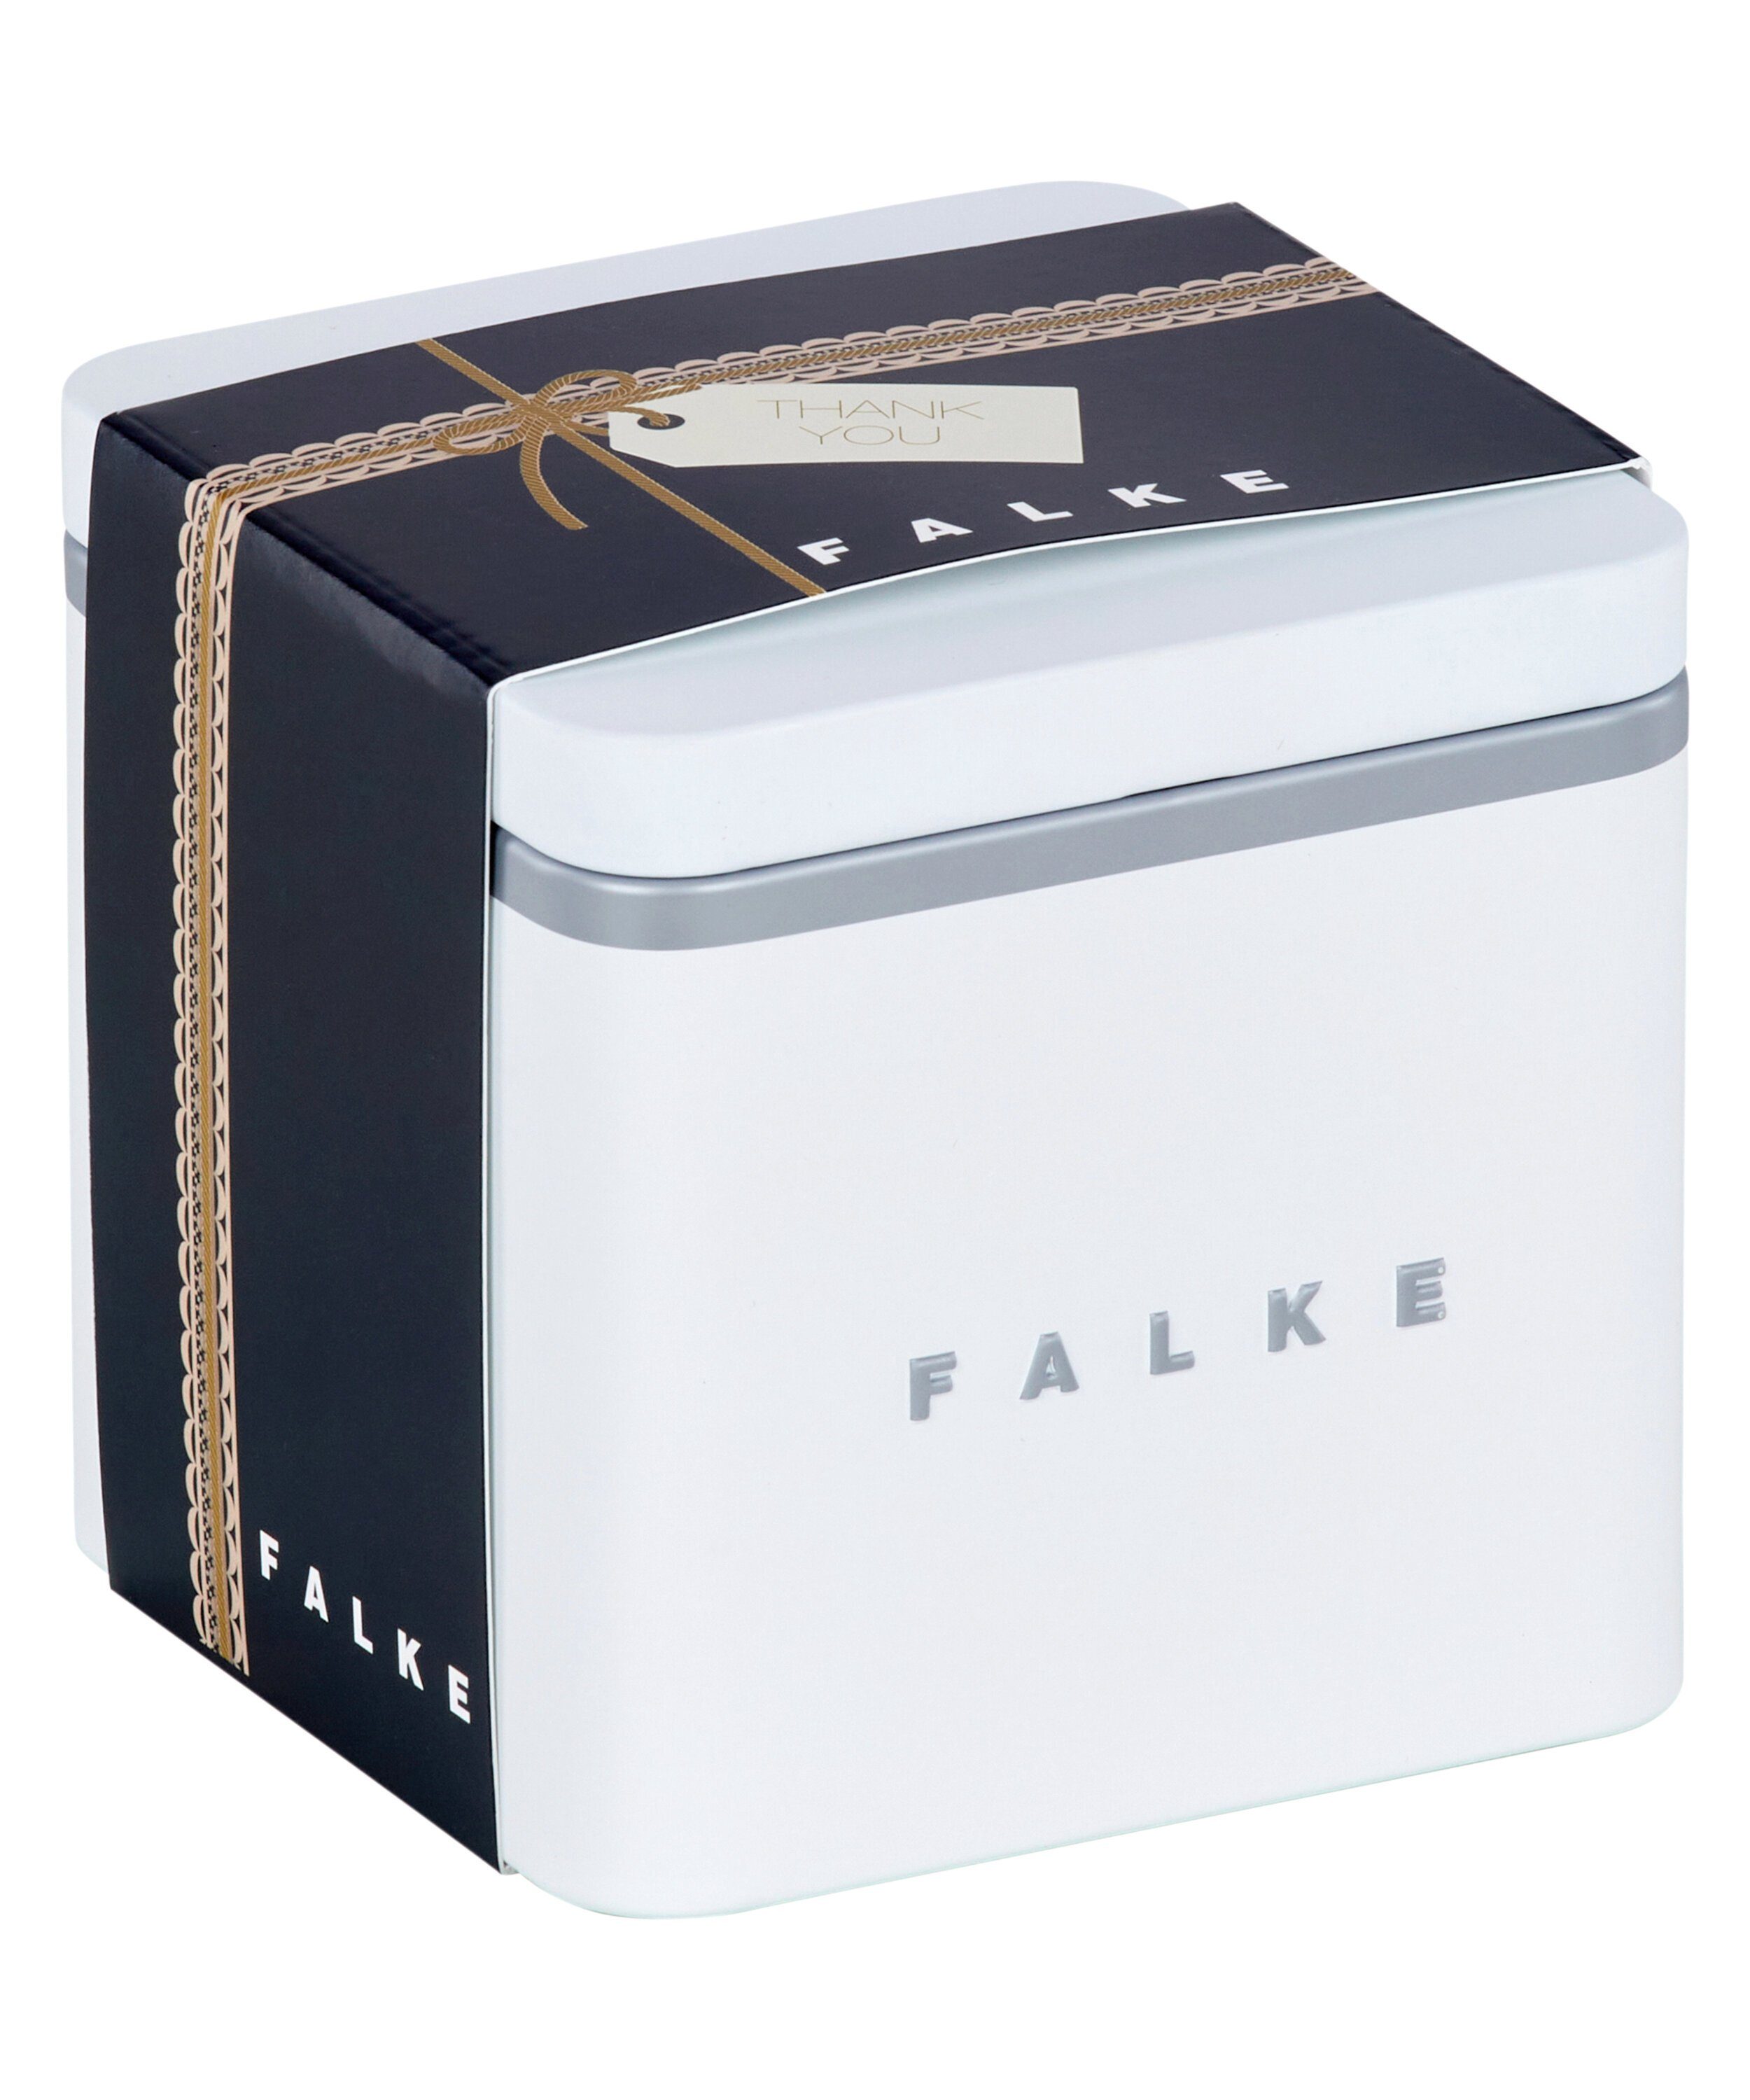 3-Pack (3-Paar) FALKE (0050) Socken Happy Giftbox sortiment